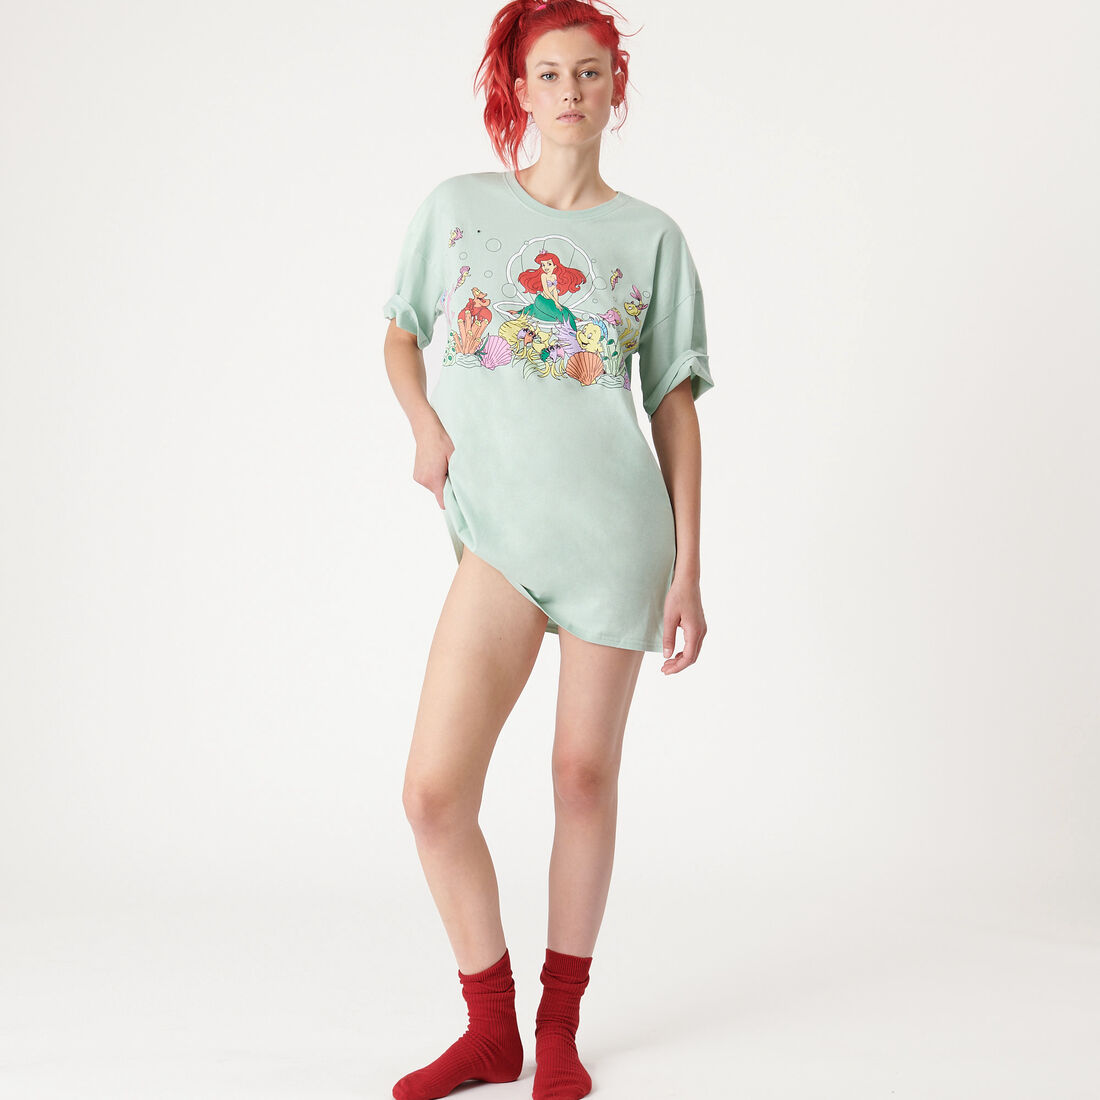 long t-shirt with Little Mermaid print;